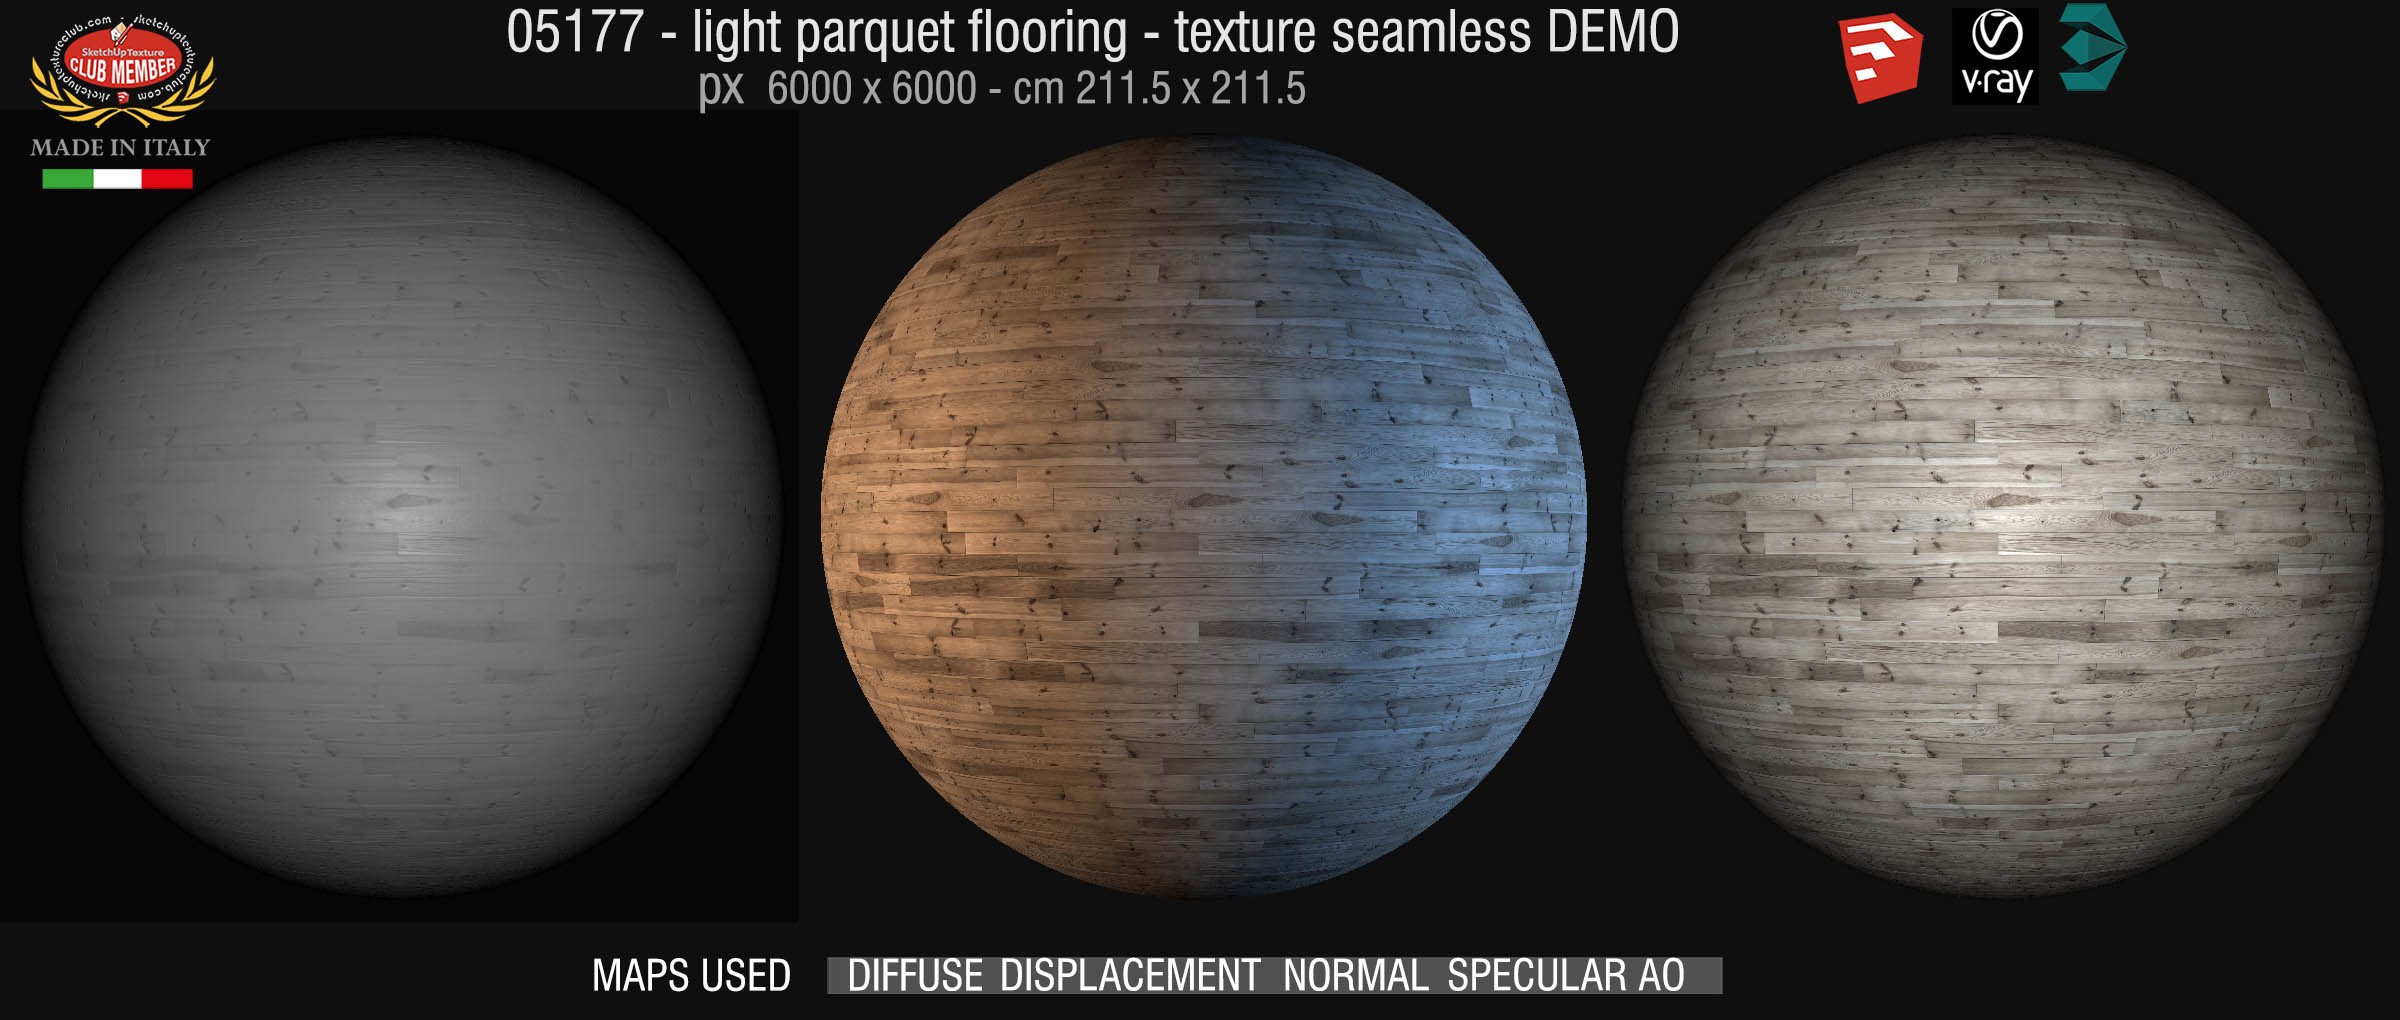 05177 HR Light parquet texture seamless + maps DEMO